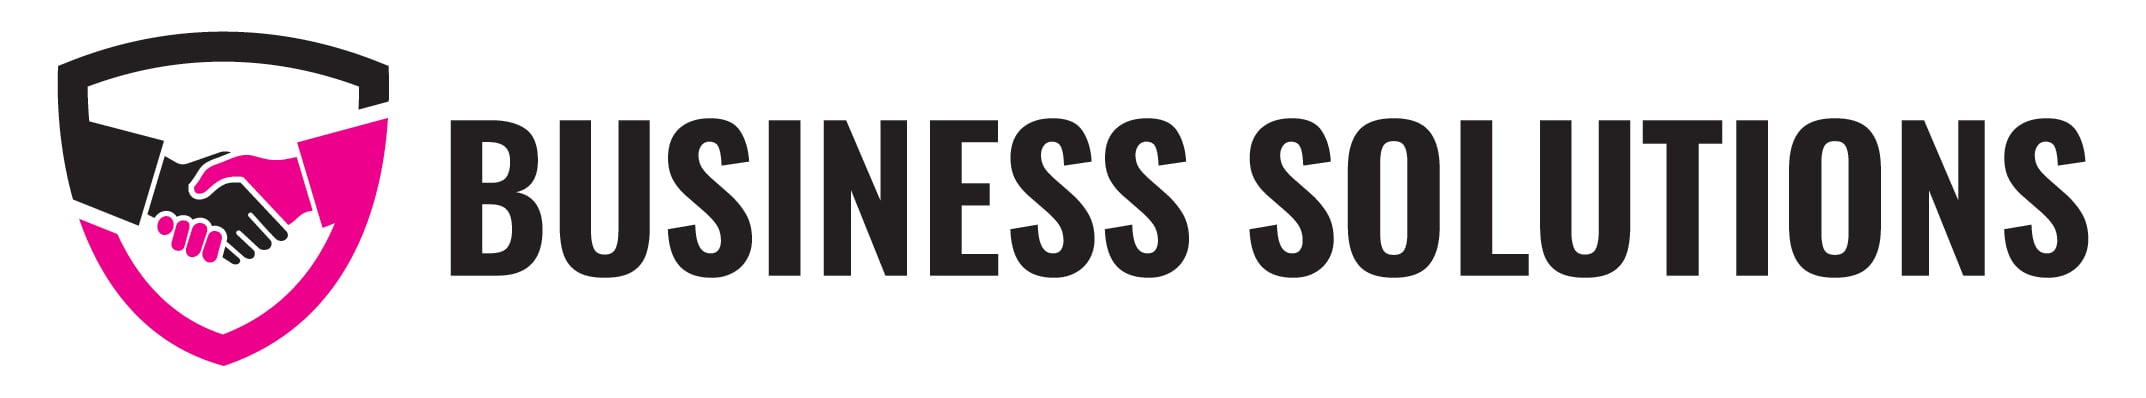 Logo_BusinessSolutions_WADE_030424_TH-FINAL